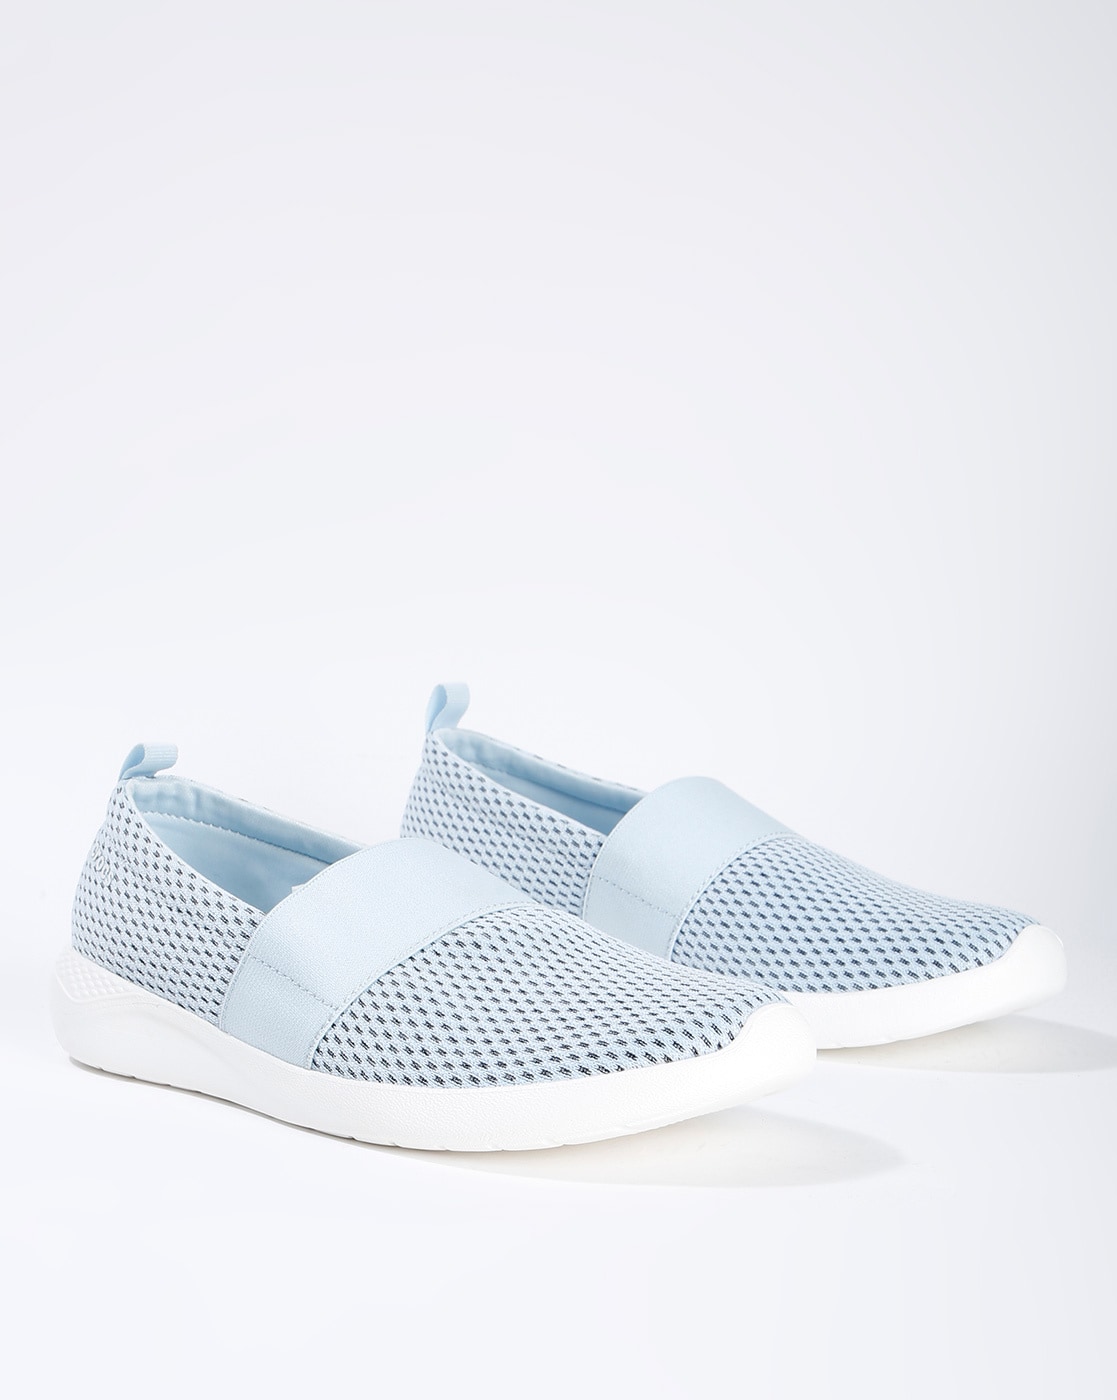 crocs mesh slip on shoe